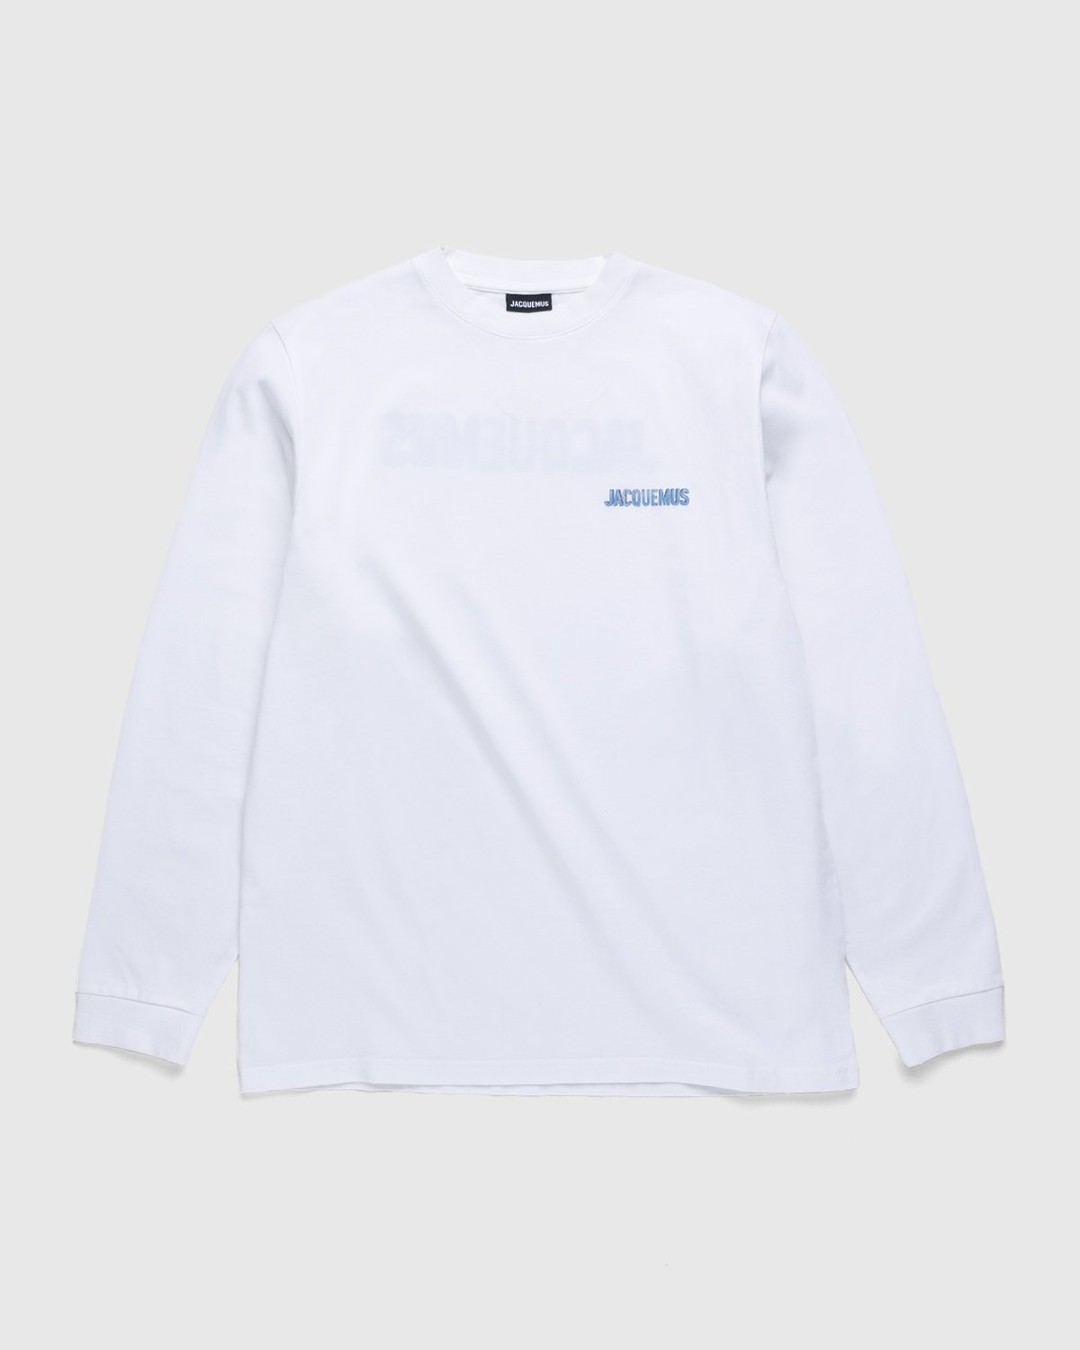 JACQUEMUS – Le T-Shirt Gelo Print Ice Jacquemus White - Longsleeves - White - Image 1